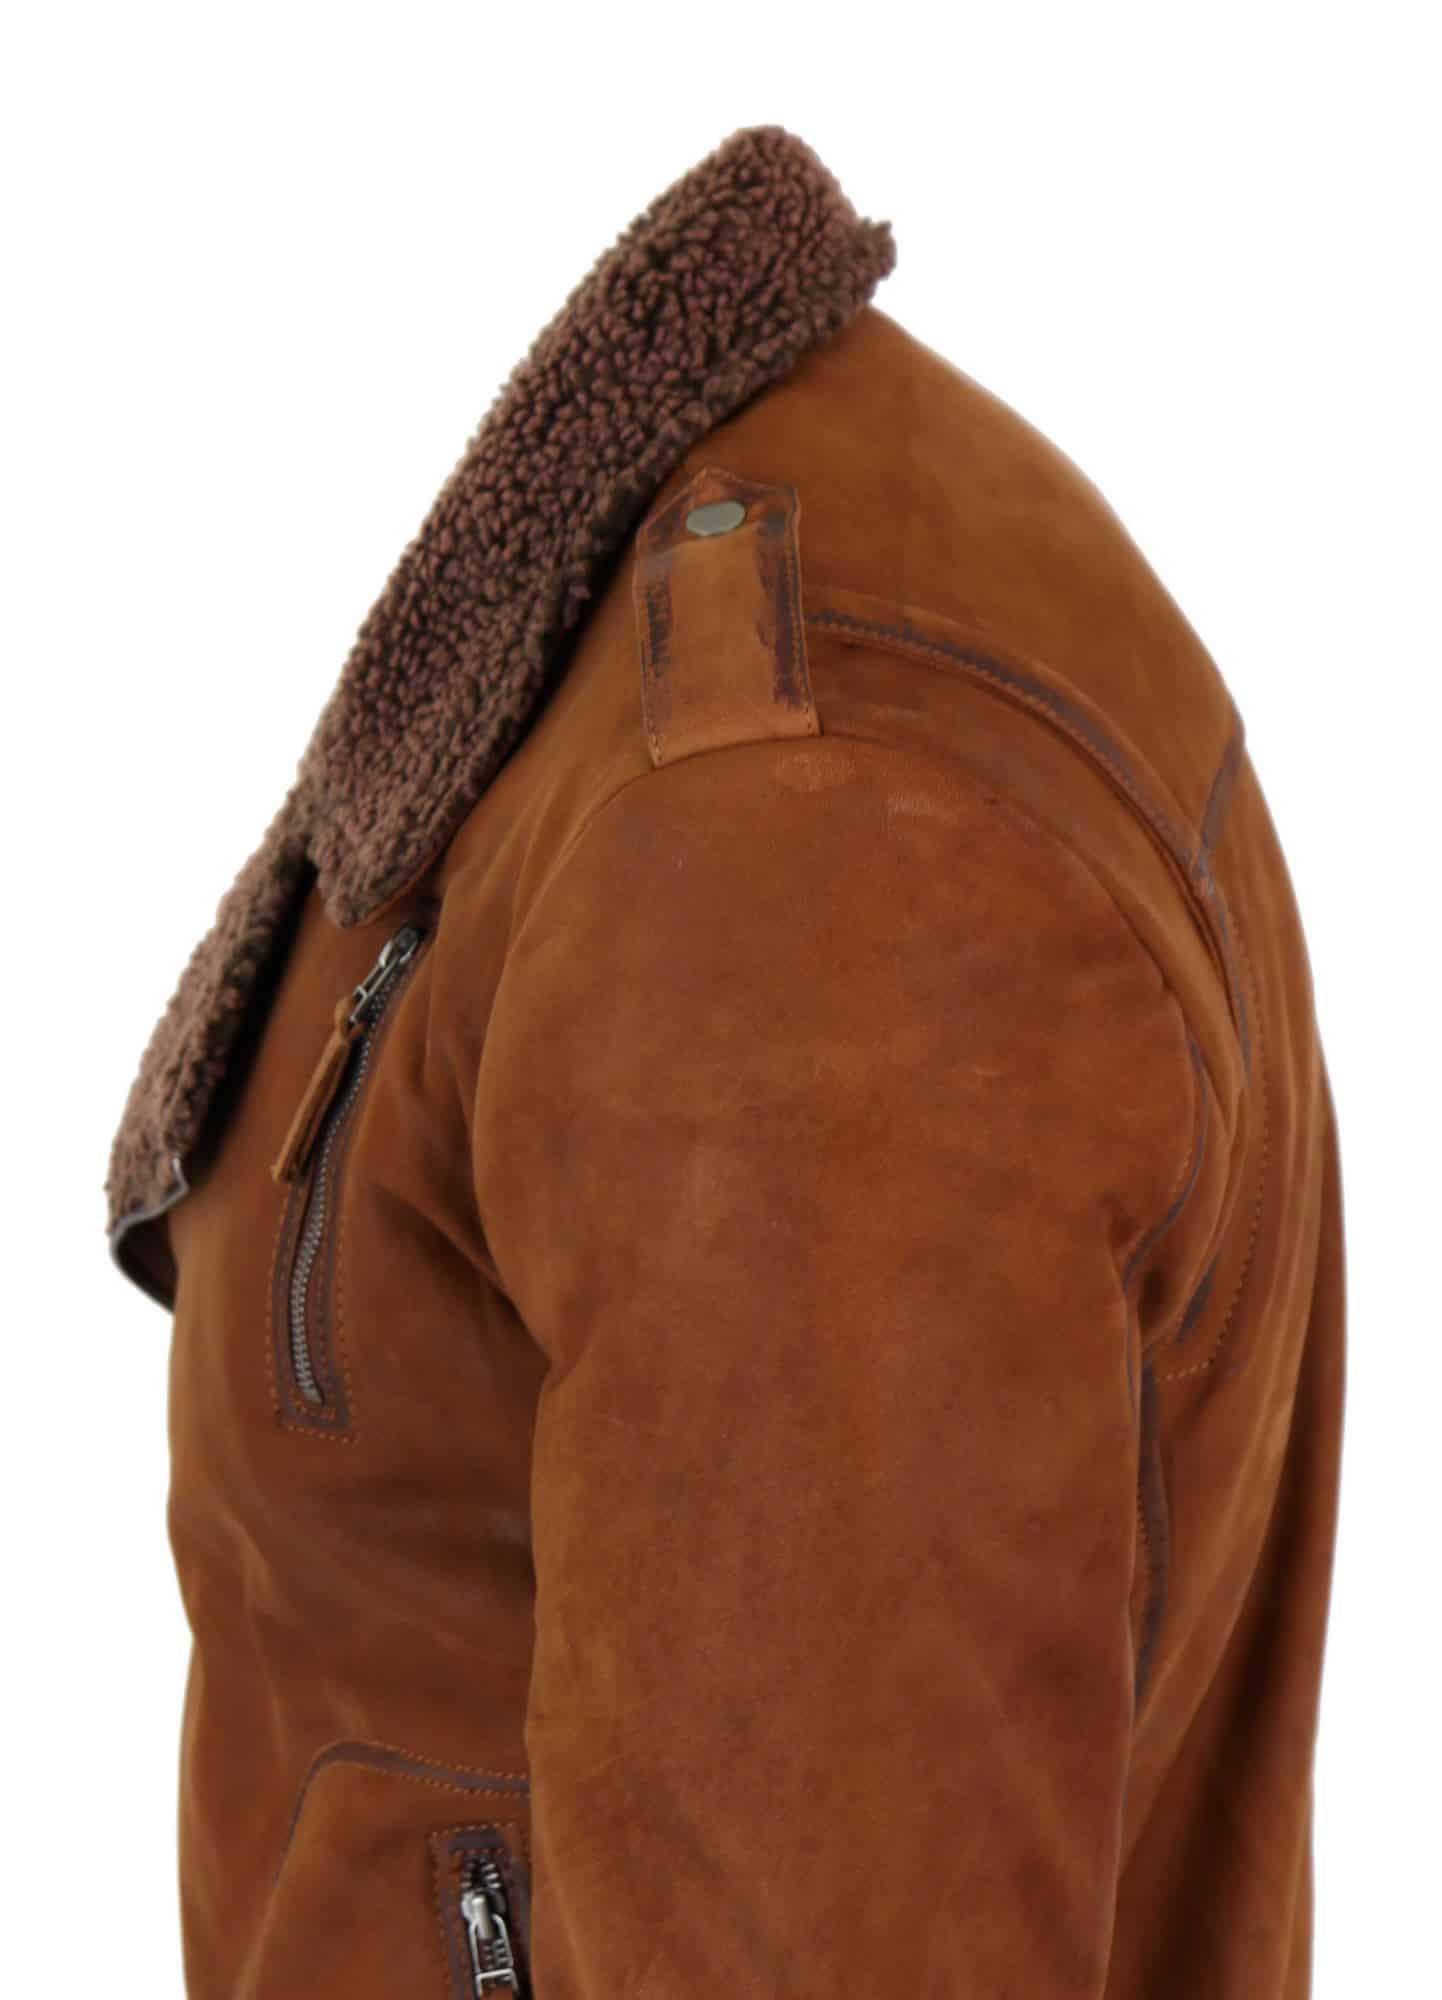 https://happygentleman.com/wp-content/uploads/2019/11/riley-mens-leather-jacket-tan-brown4.jpg